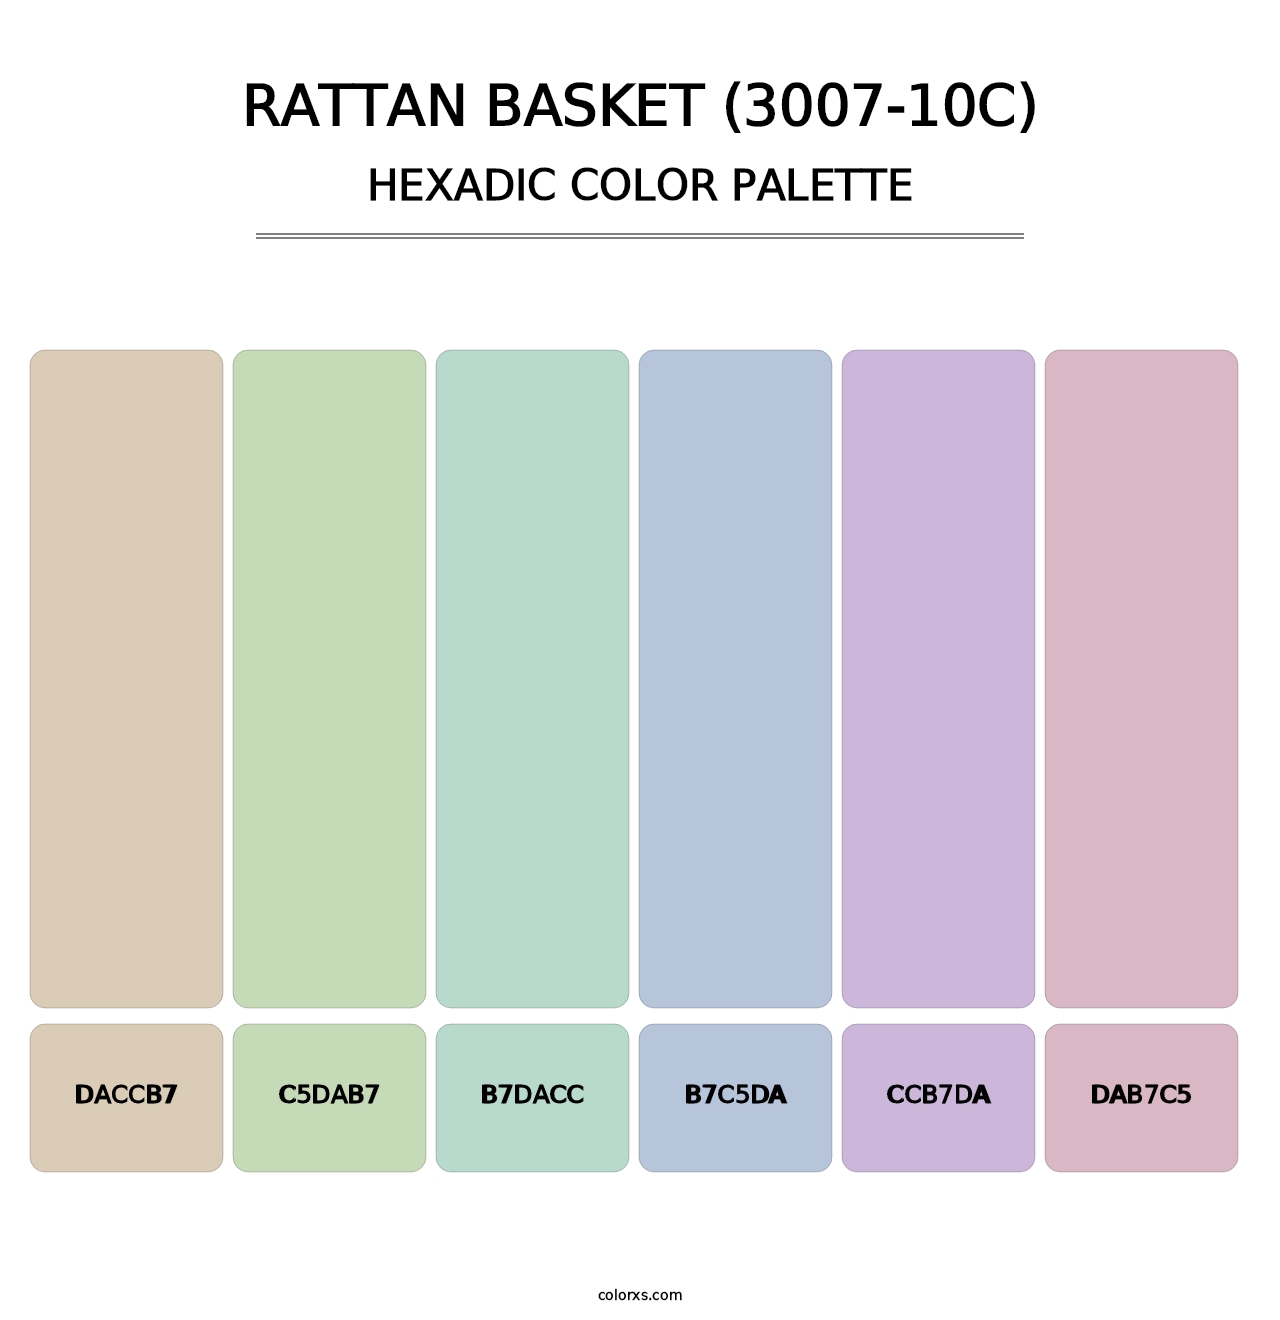 Rattan Basket (3007-10C) - Hexadic Color Palette